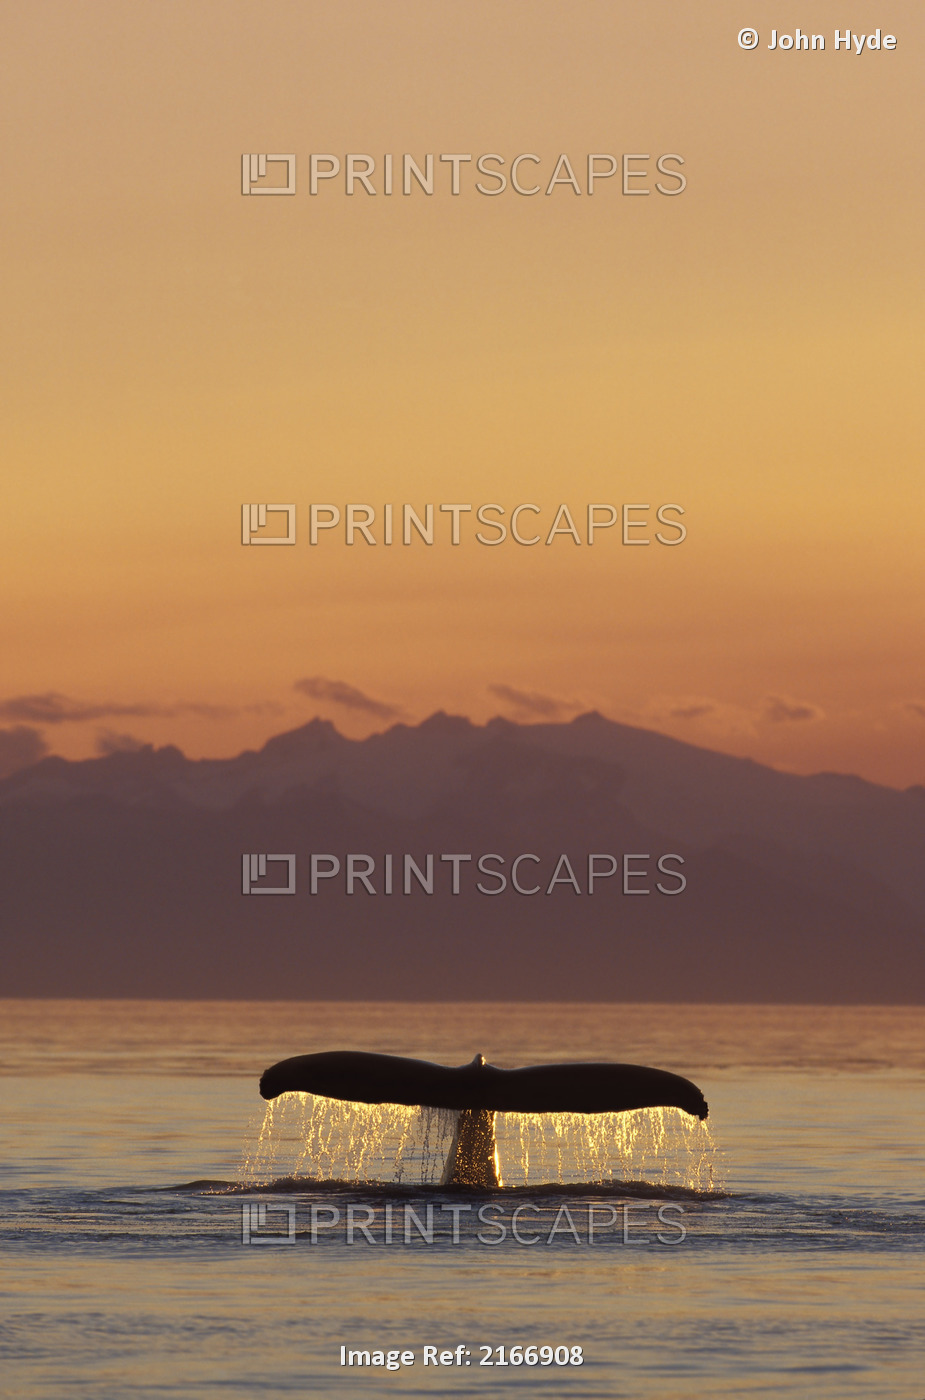 Humpback Whale Fluke @ Sunset Inside Passage Se Ak Summer